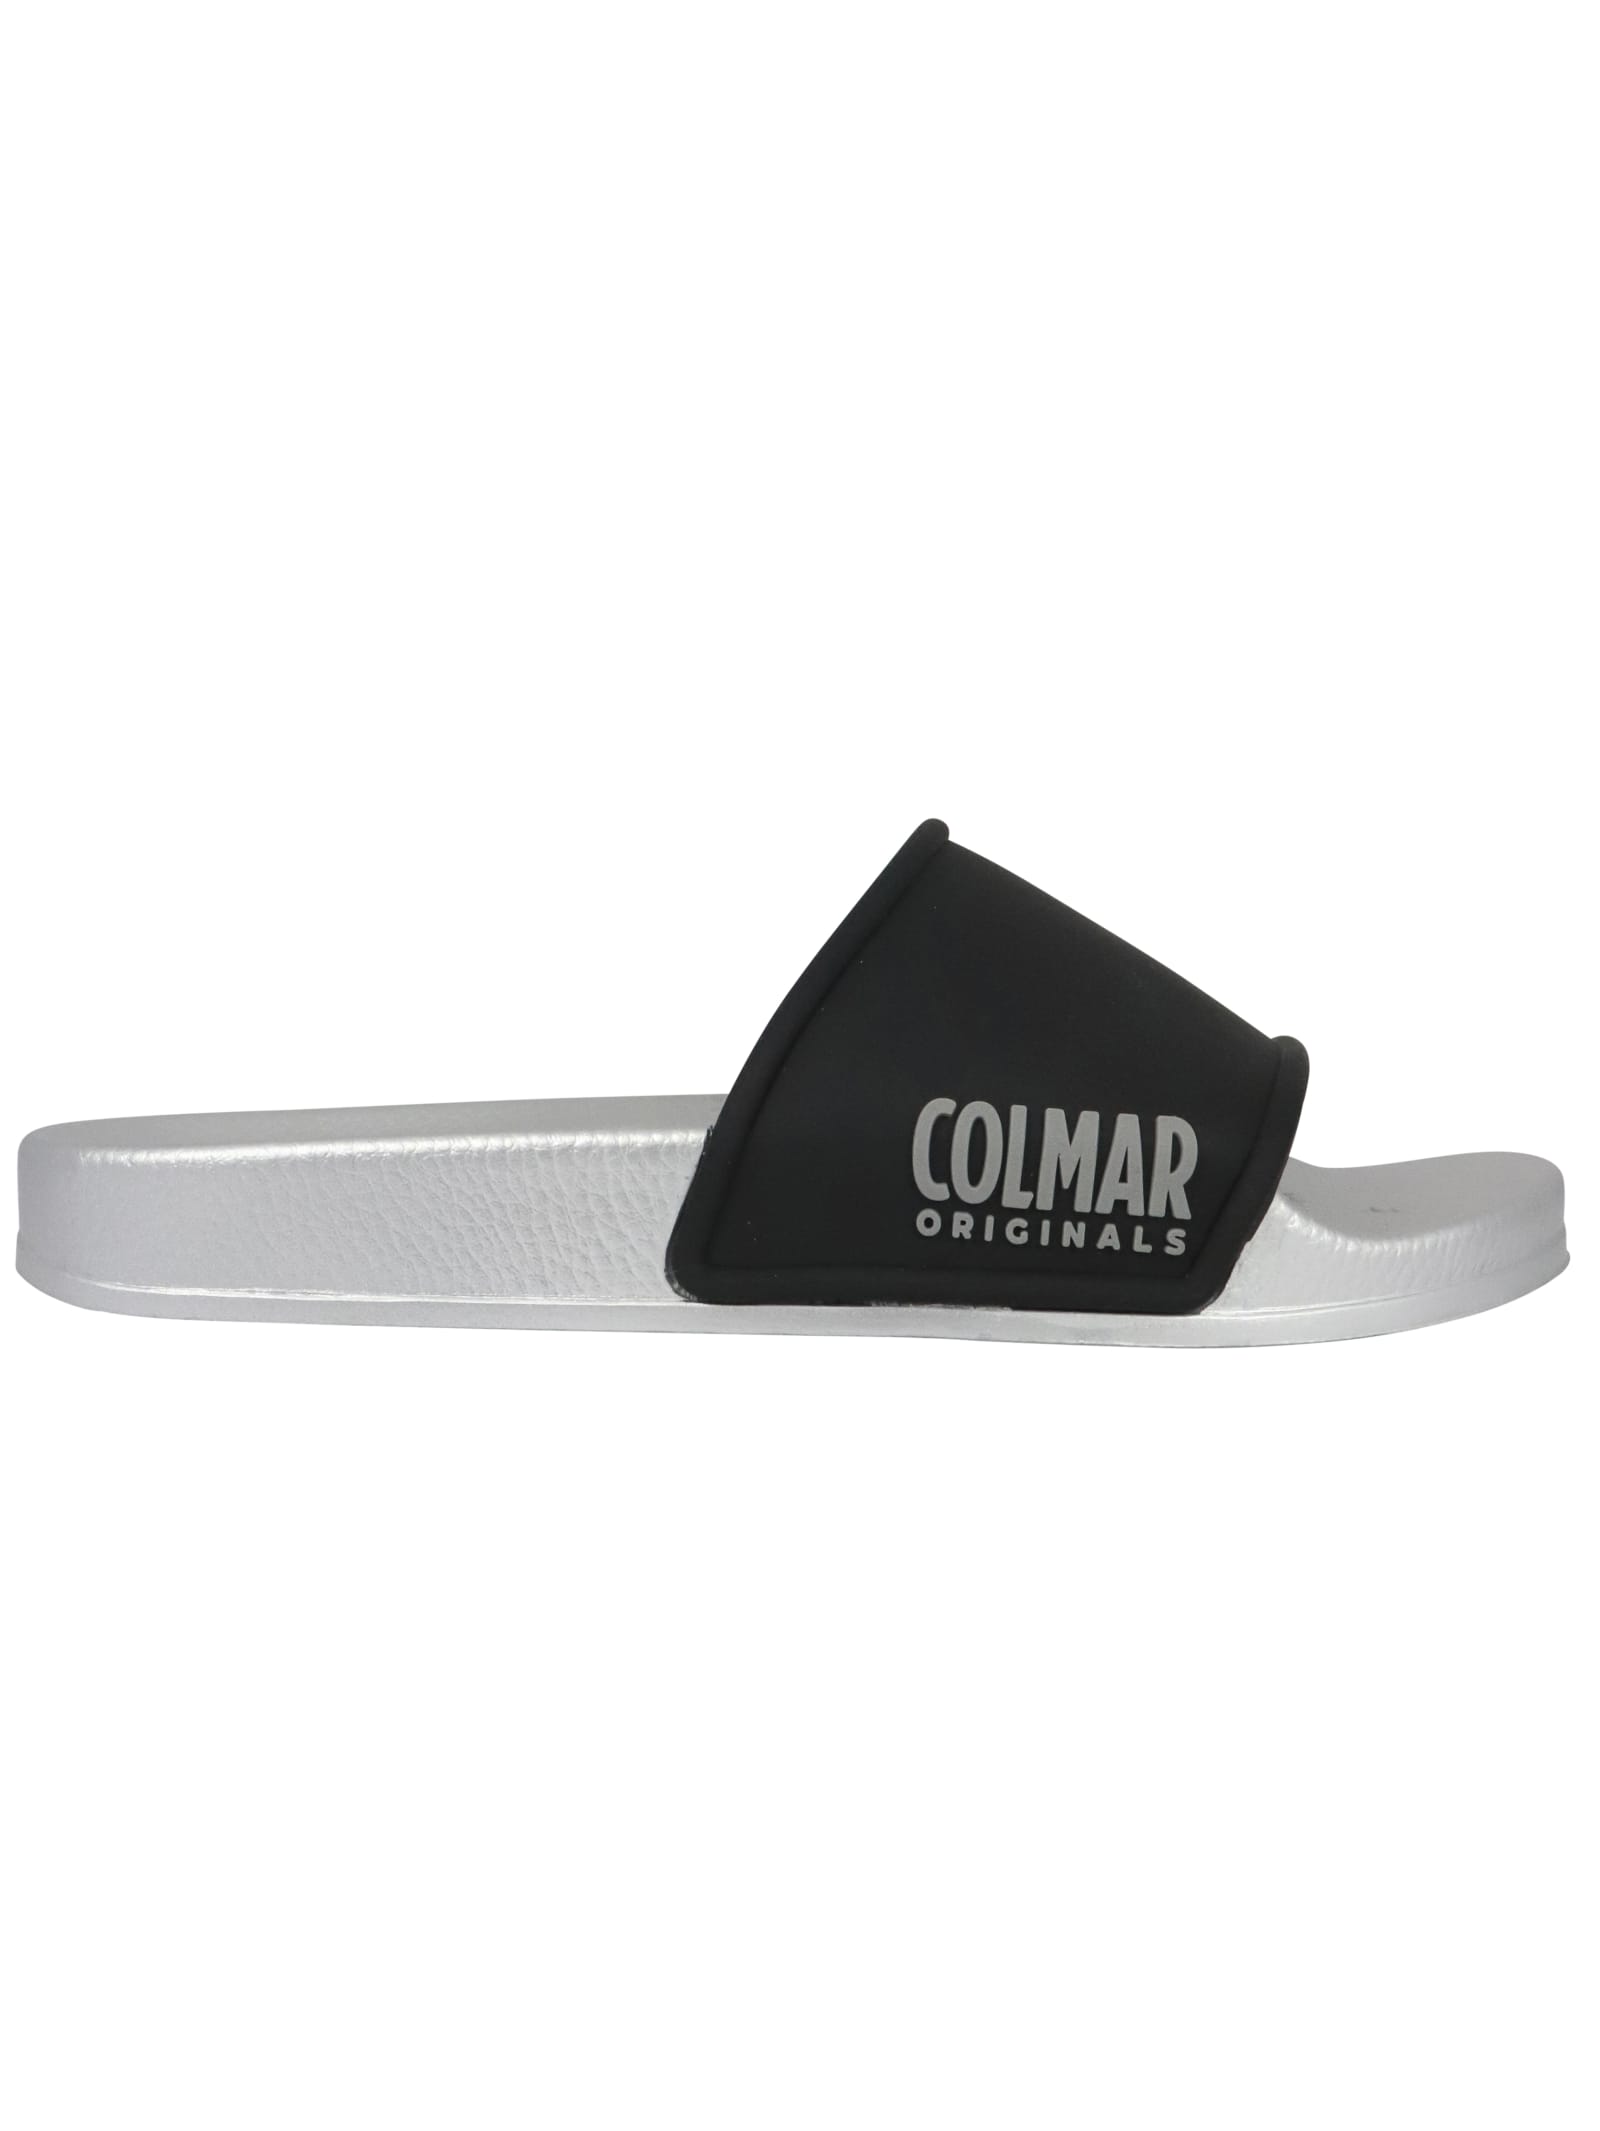 Colmar Kids' Slipper Plain Sliders In Black / Silver